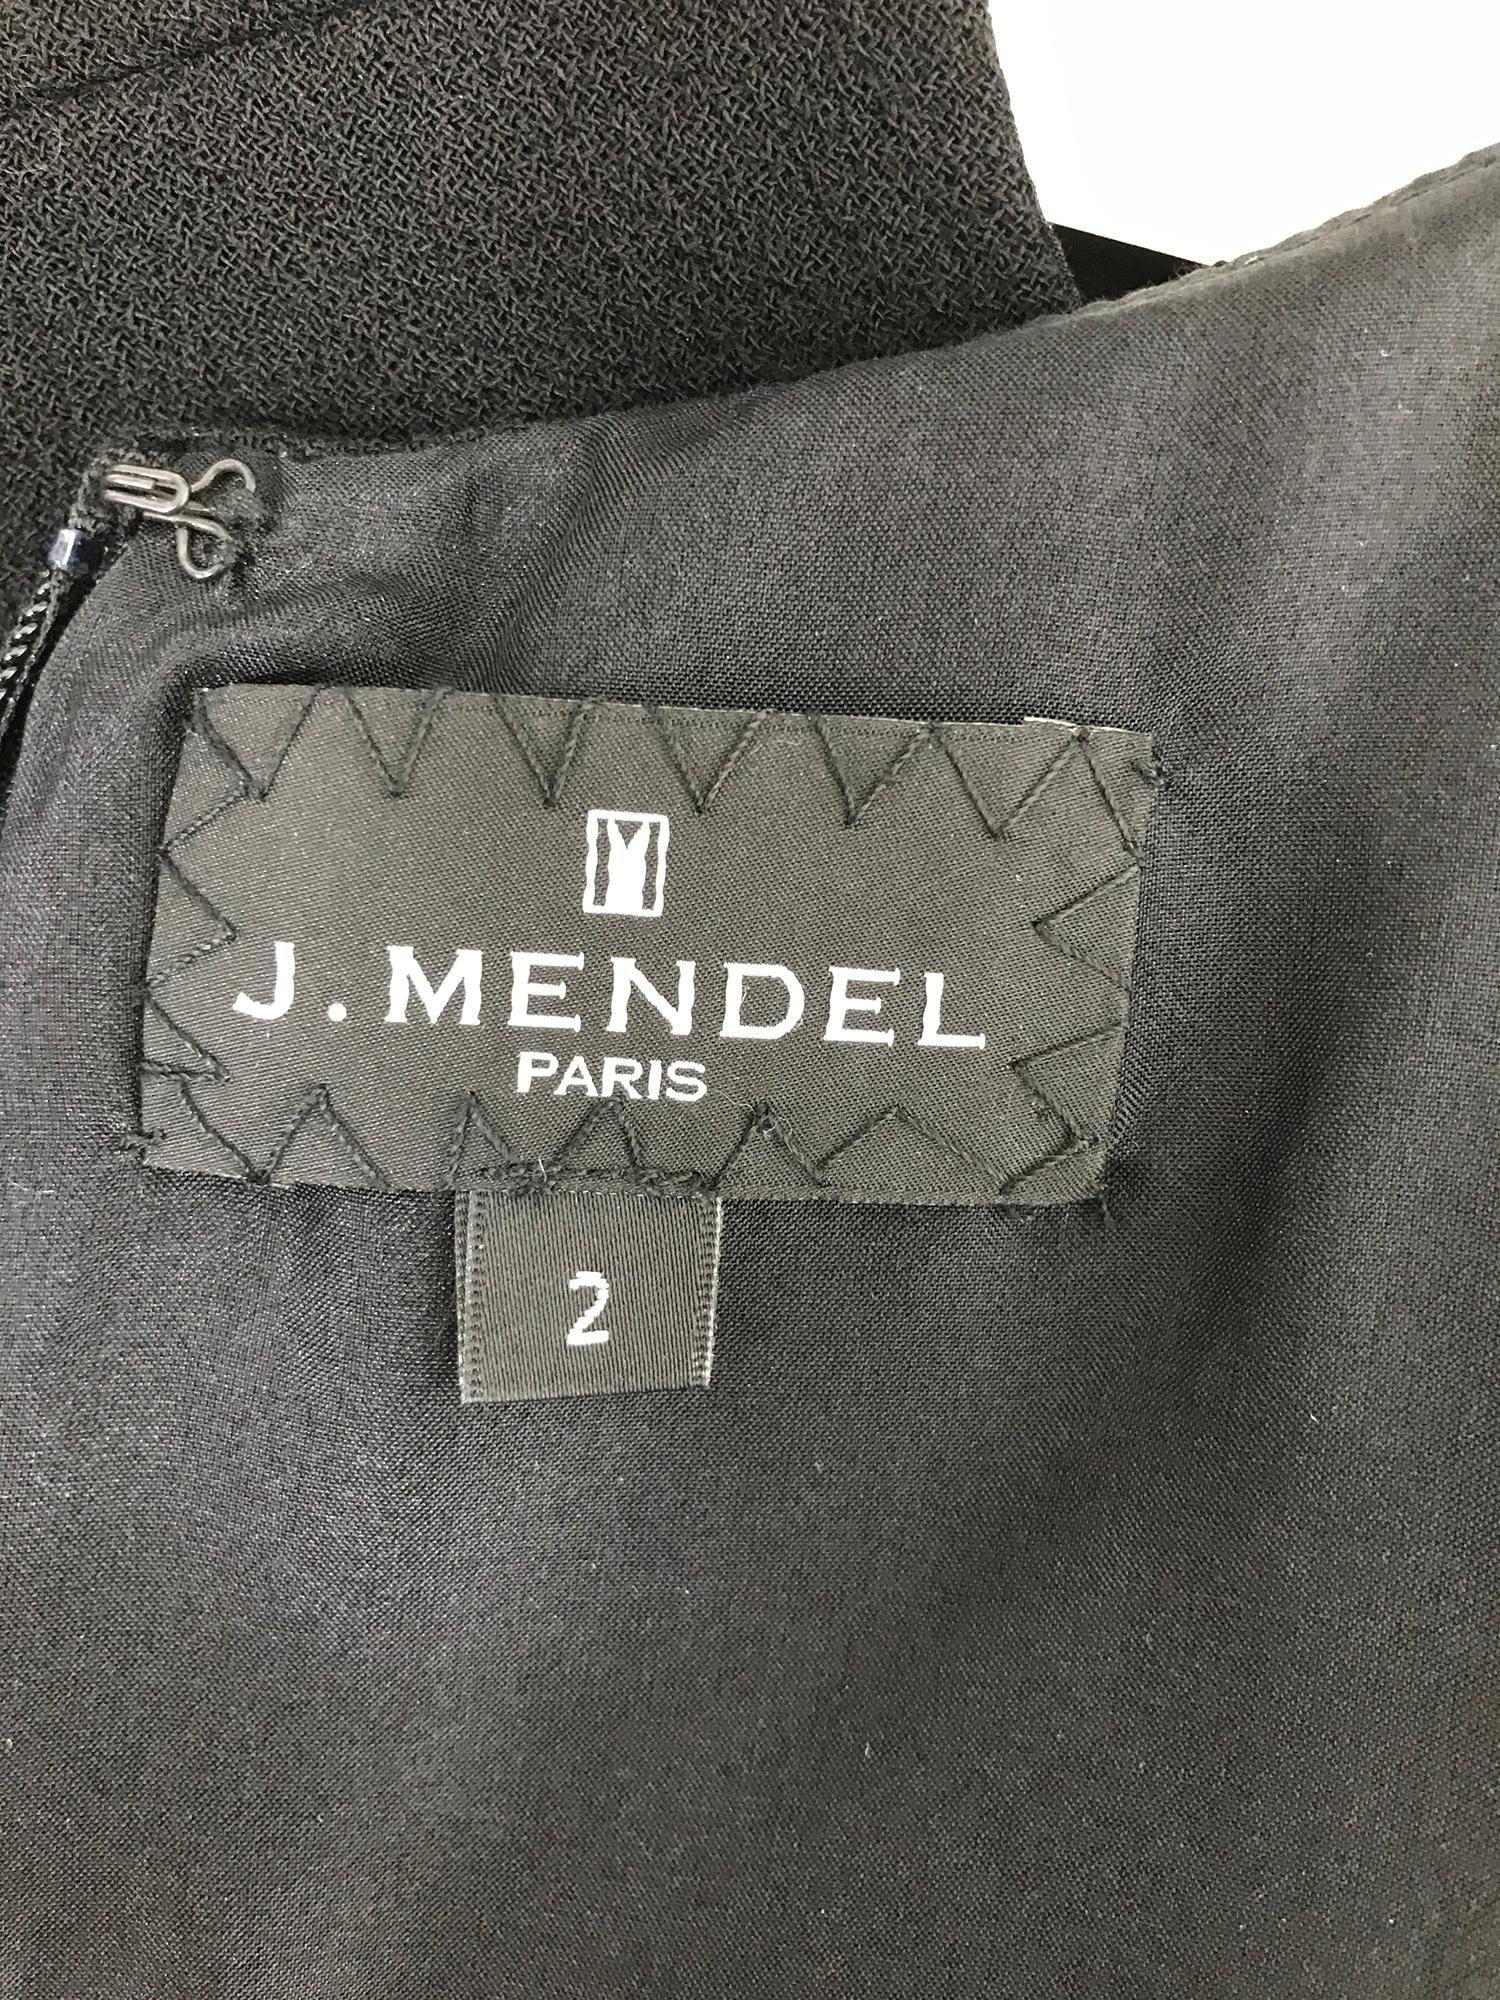 J. Mendel Paris Black Wool & Leather Sheath Dress  4